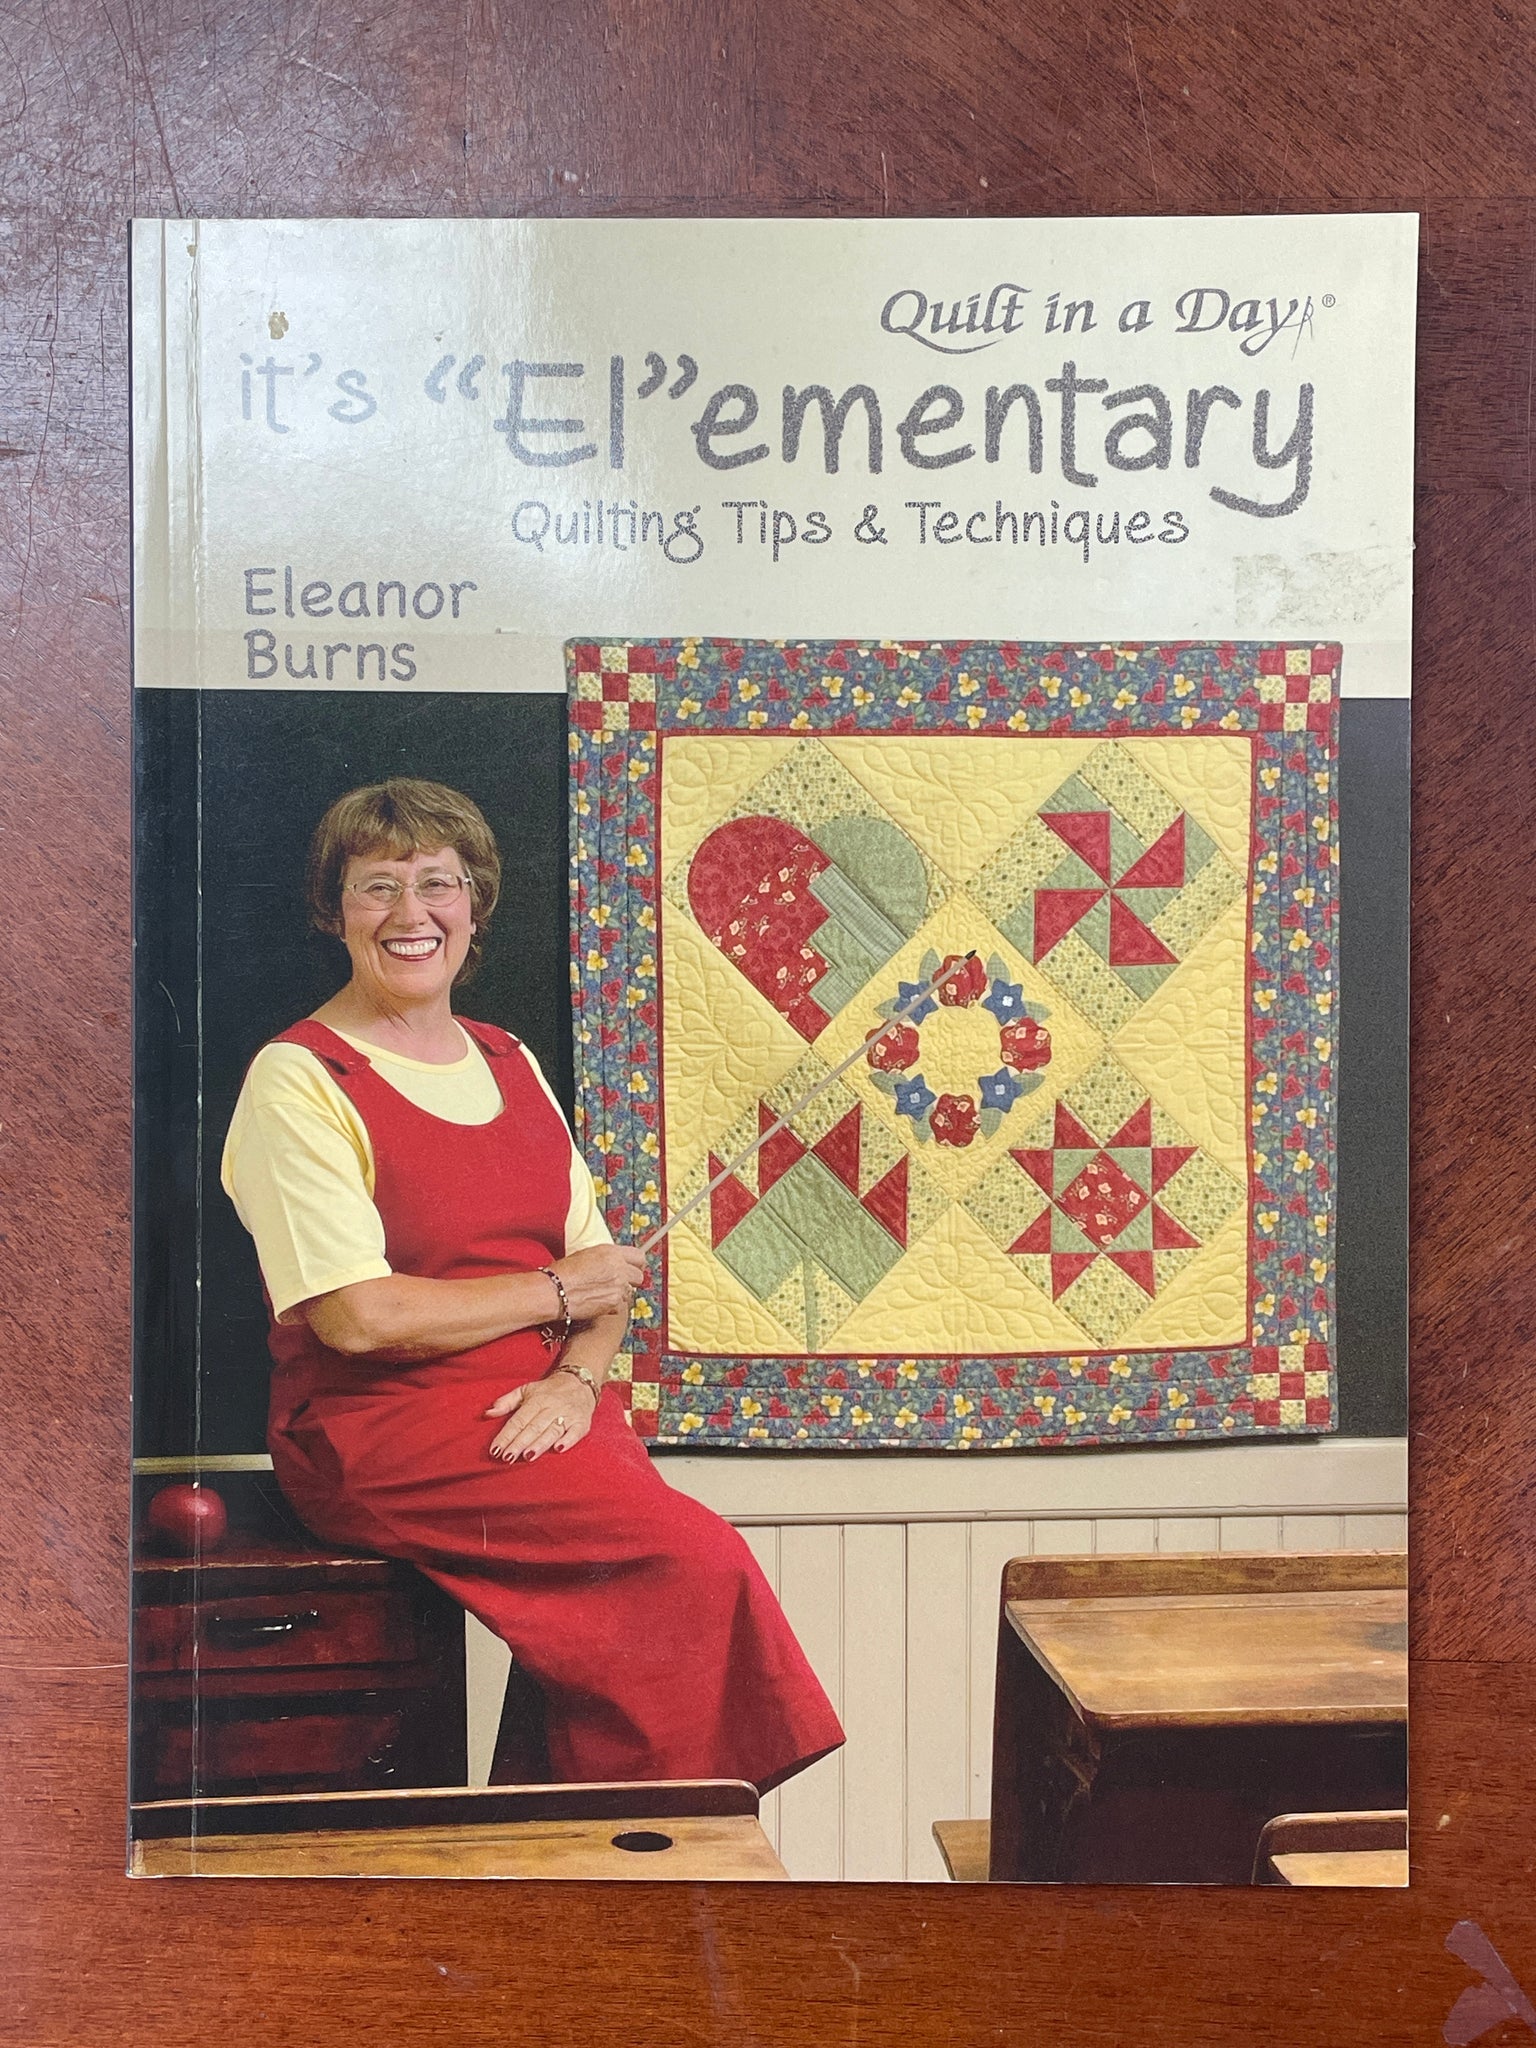 2005 Quilting Book - "It's 'El'ementary"